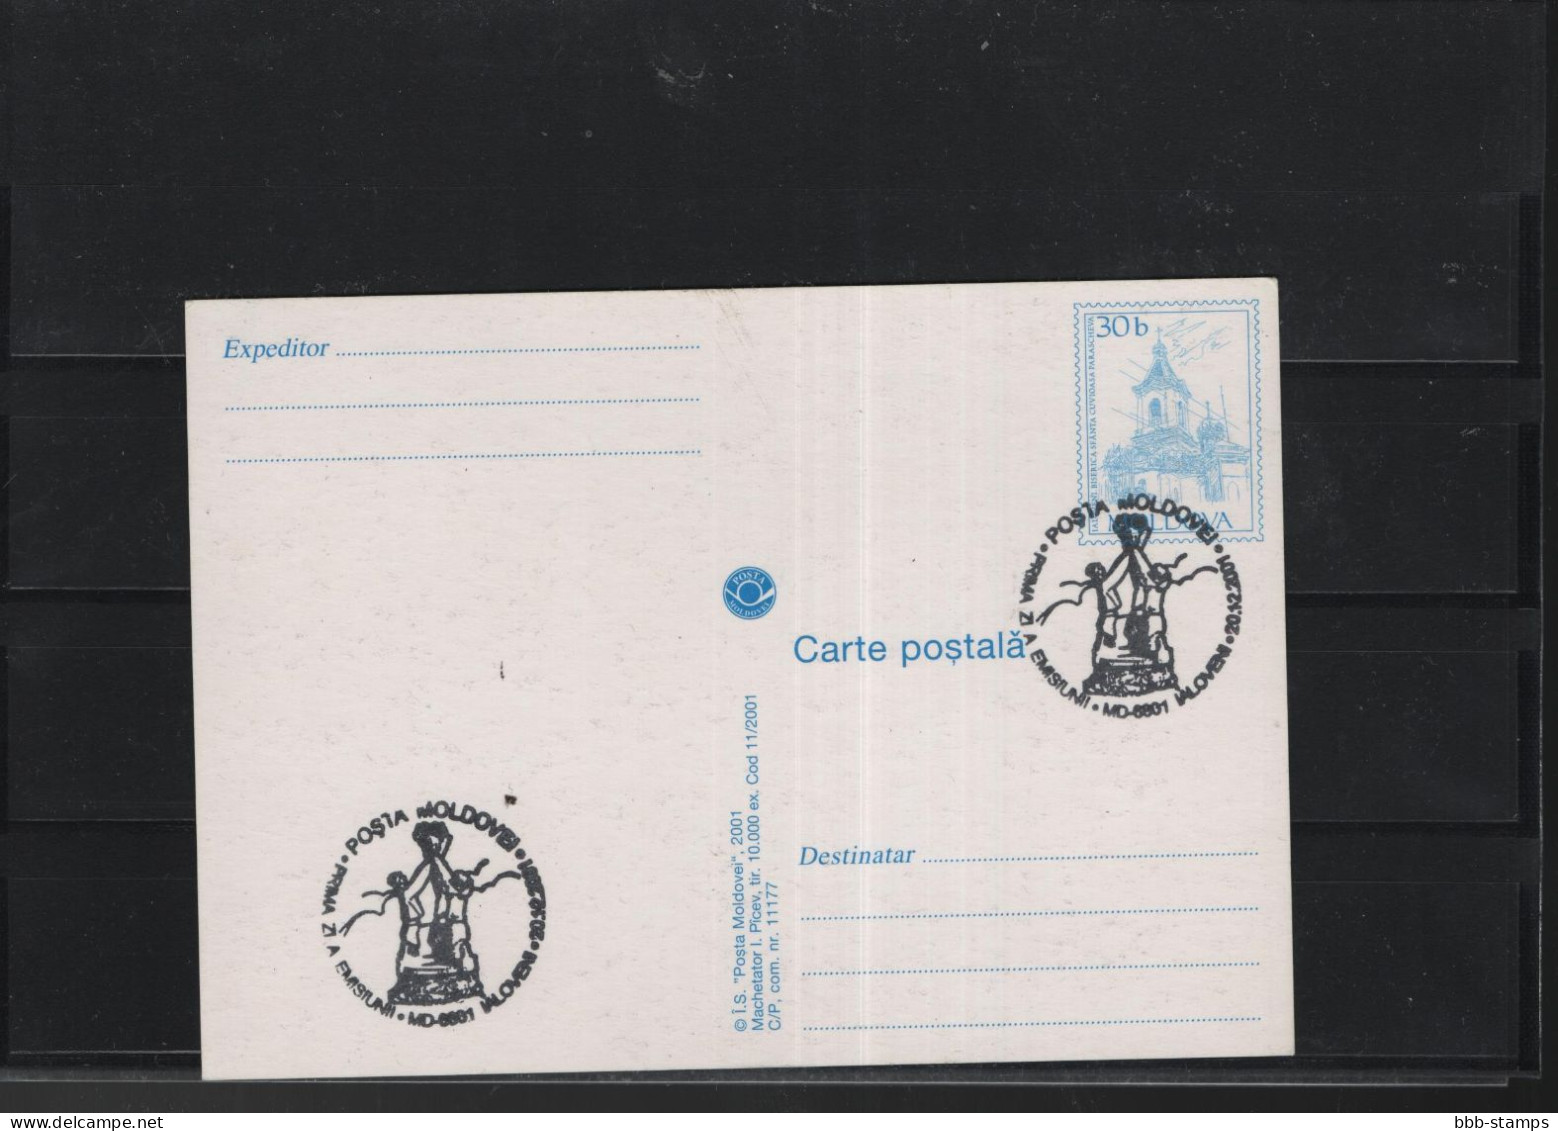 Moldavien Michel Cat.No. Postal Stat  Card Issued  20.12.2001 - Moldawien (Moldau)